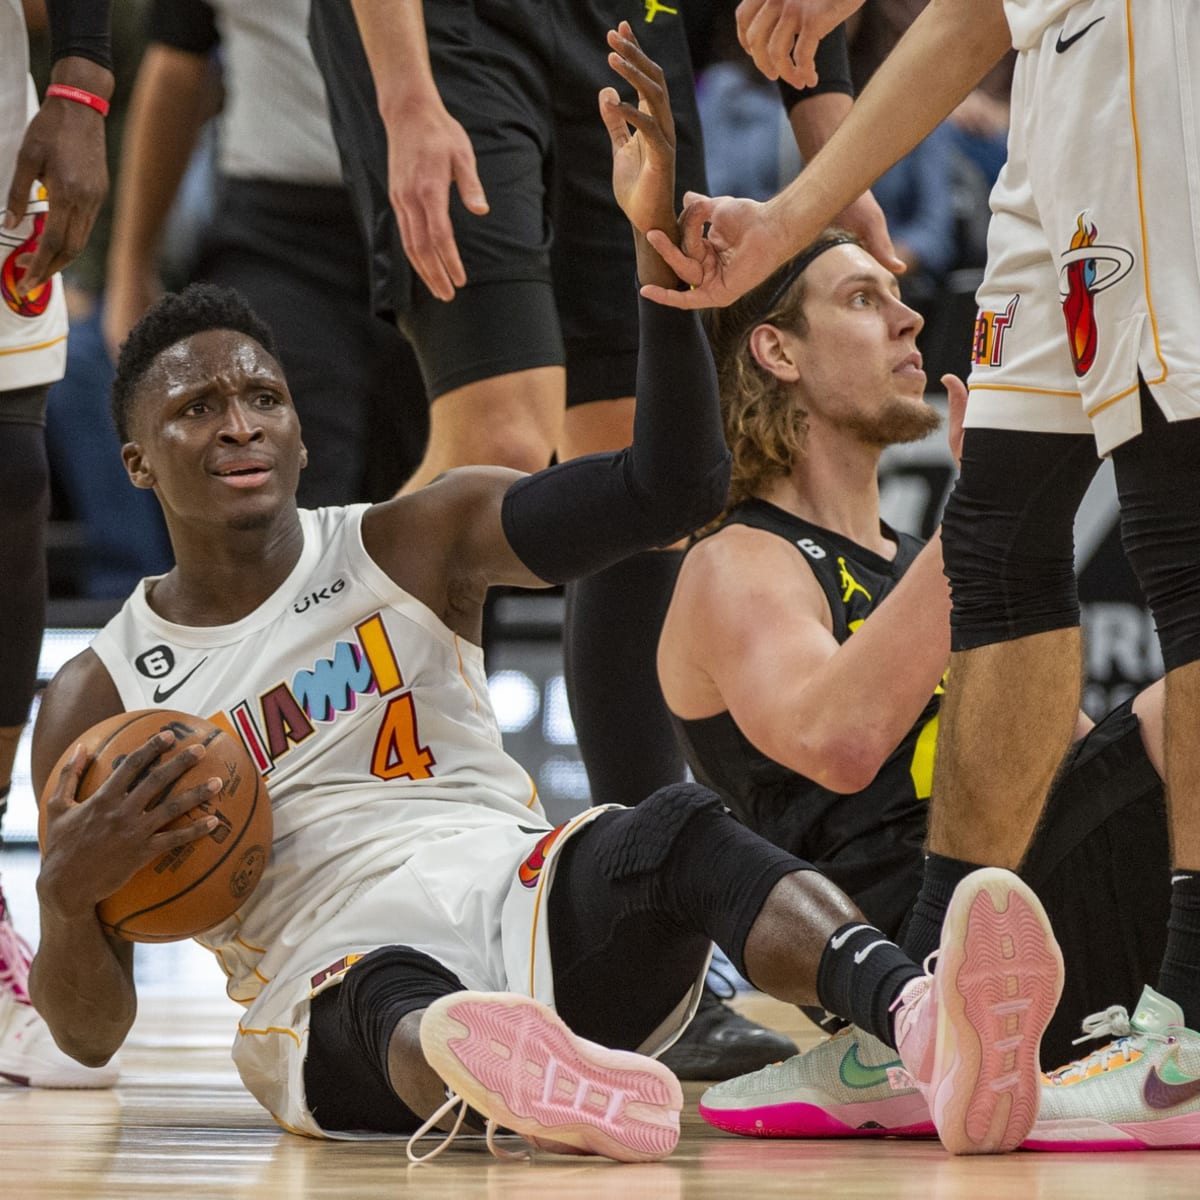 Takeaways from Heat's win over Warriors in Oladipo's debut